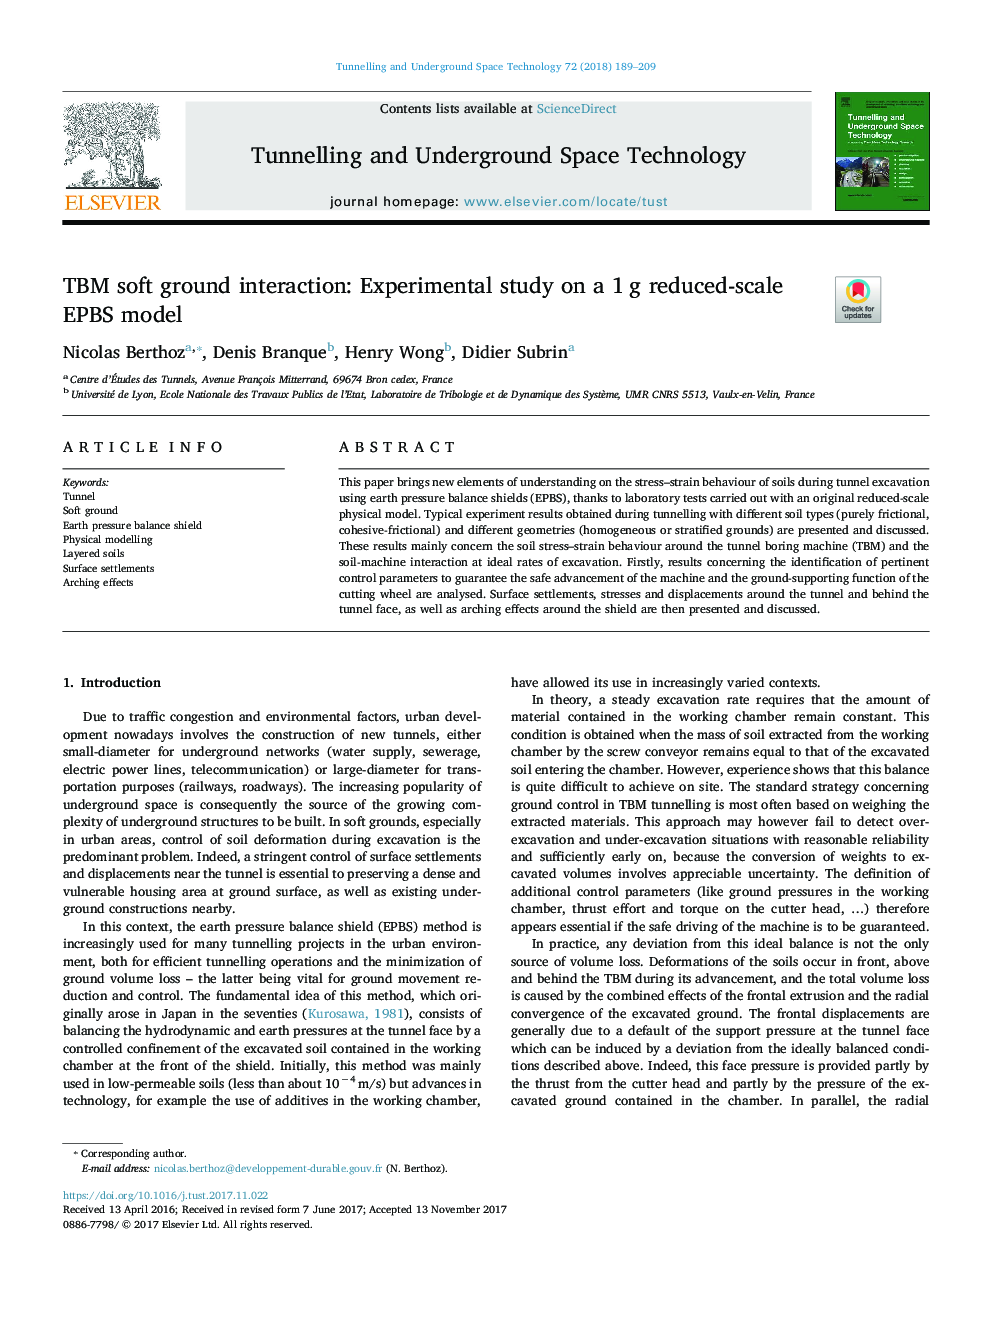 TBM soft ground interaction: Experimental study on a 1â¯g reduced-scale EPBS model